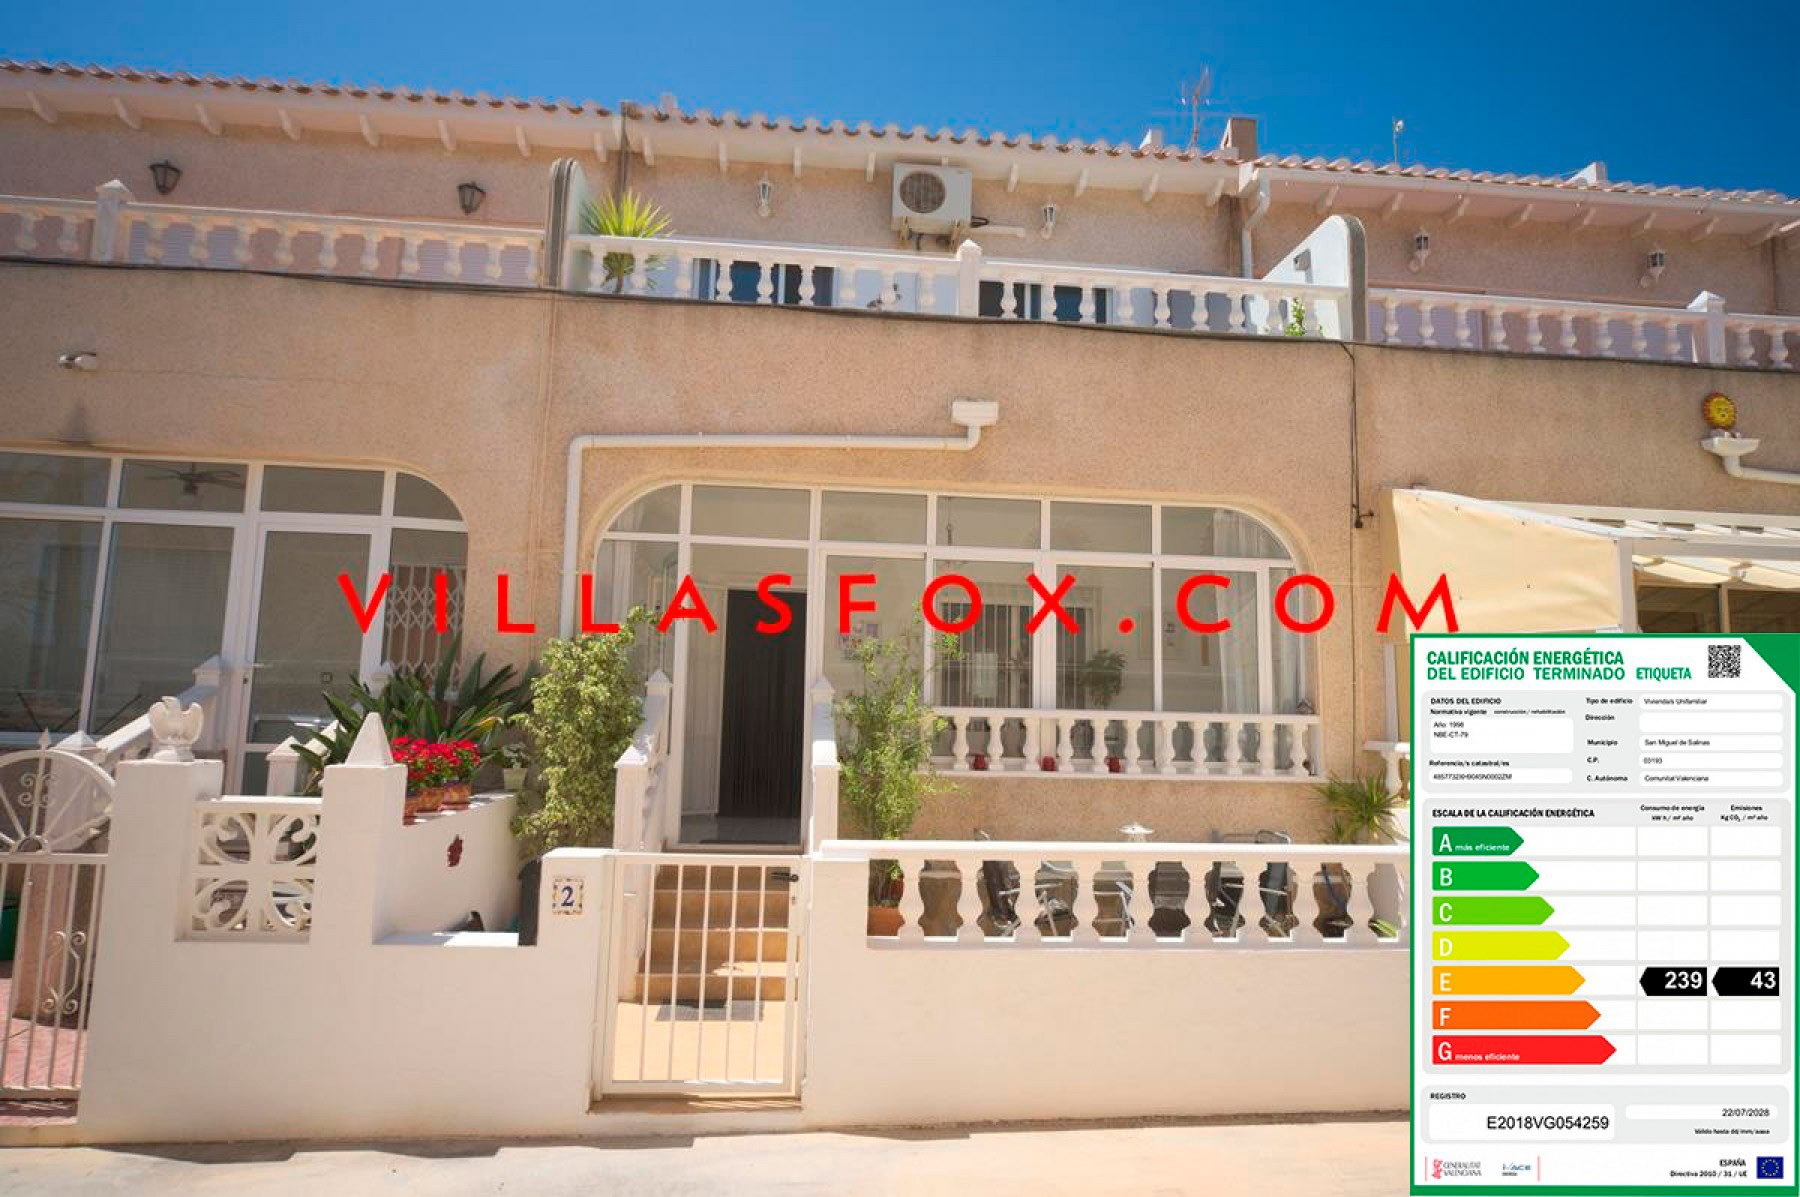 2 Градска къща Сан Мигел де Салинас в Балкн де ла Costa Blanca by Villas Fox най-добрите агенти по недвижими имоти 610fdbdf4a34f